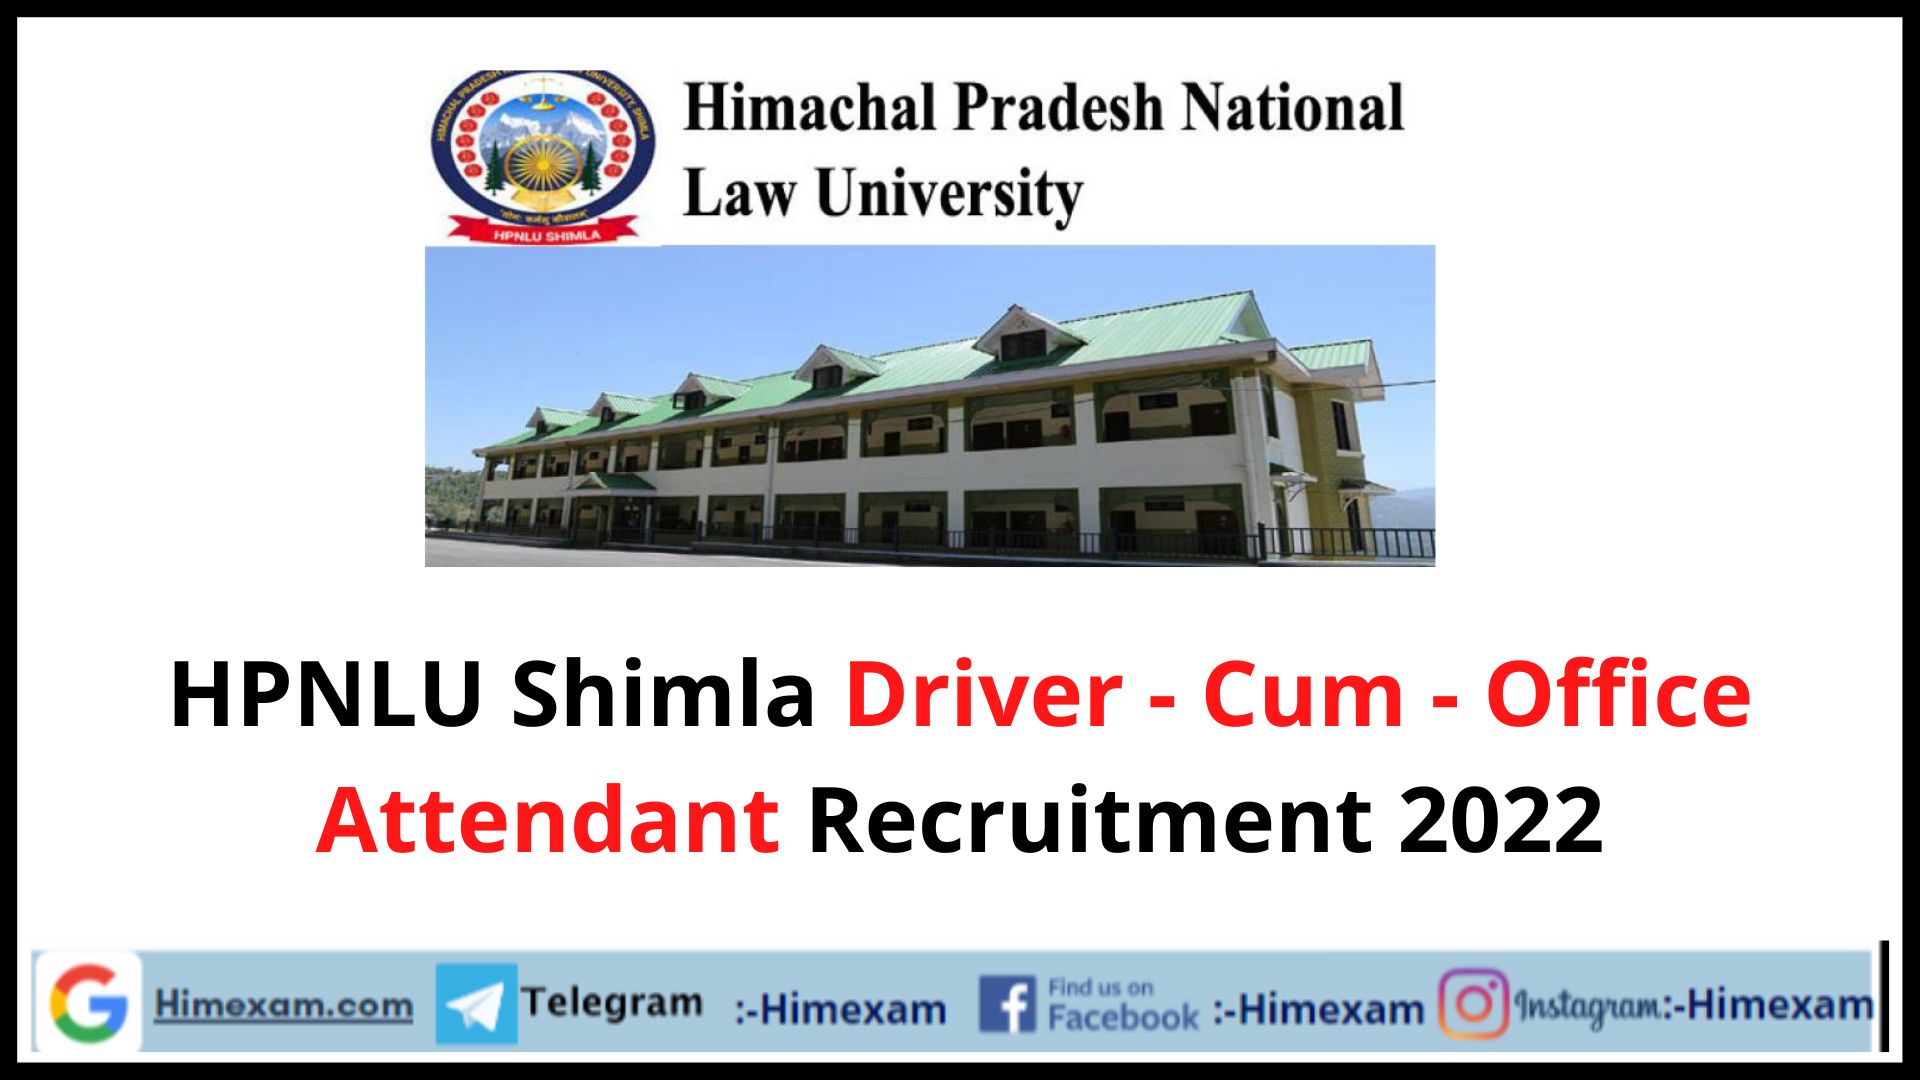 HPNLU Shimla Driver - Cum - Office Attendant Recruitment 2022